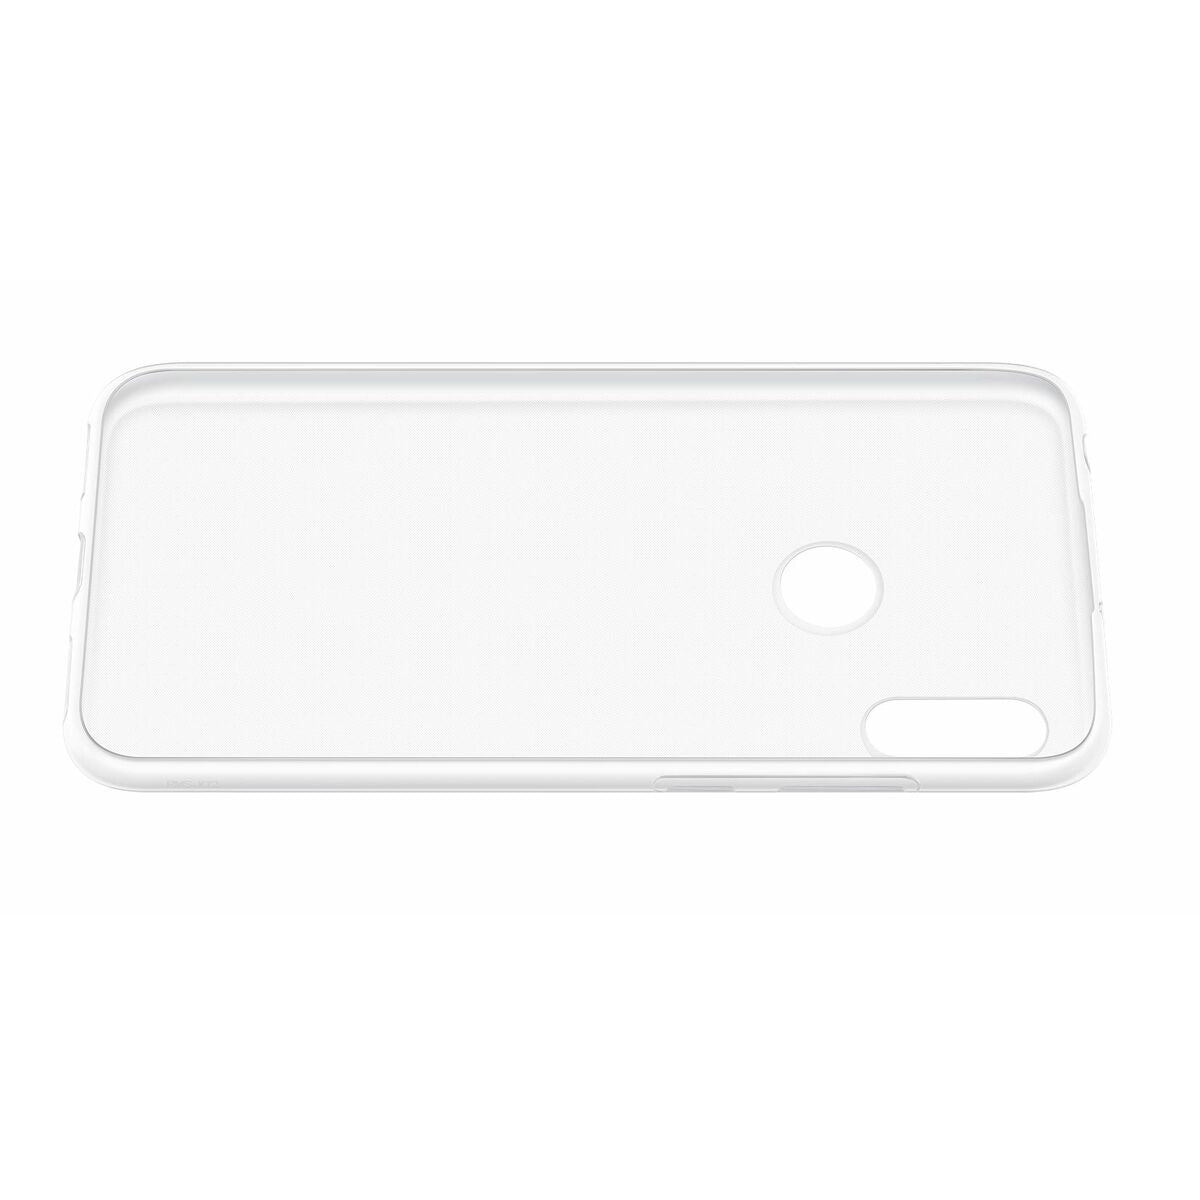 Mobile cover Huawei P40 Lite TPU Flexible Transparent